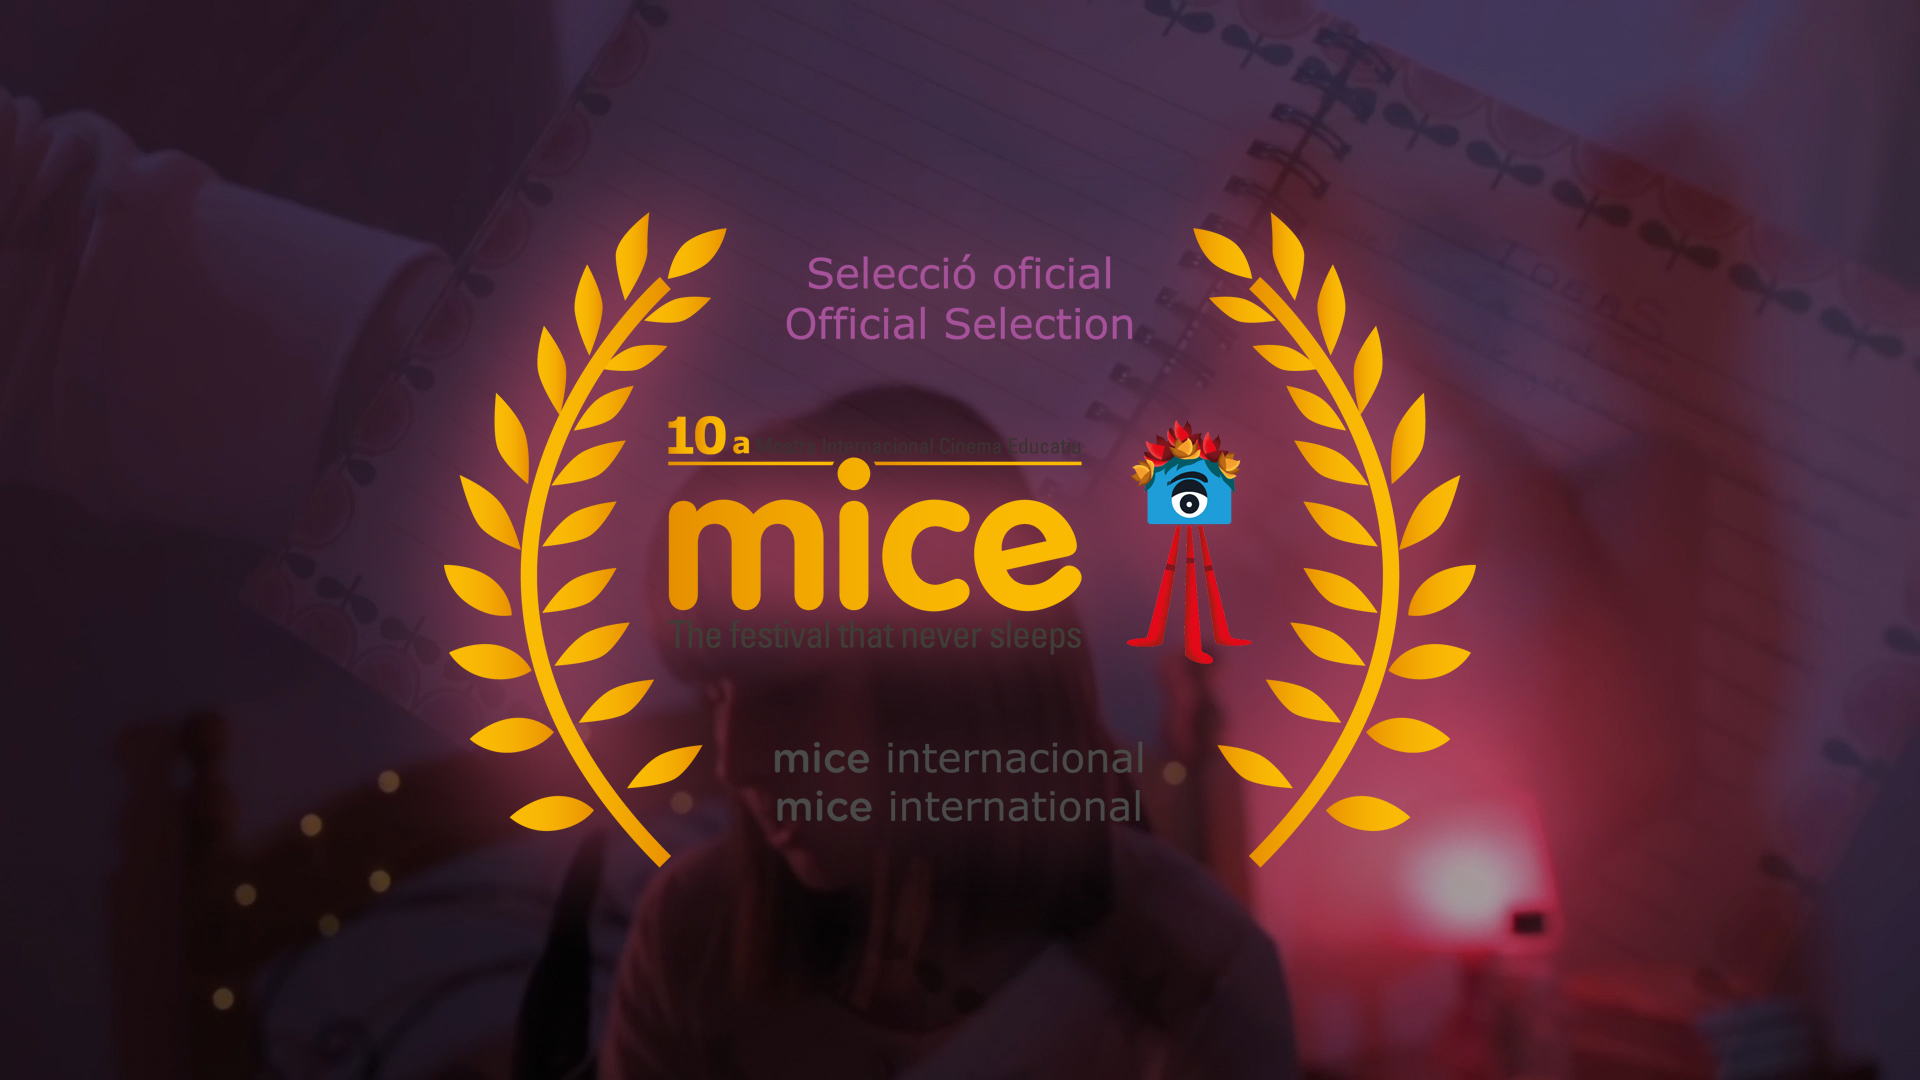 MICE Mostra Internacional Cinema Educatiu València